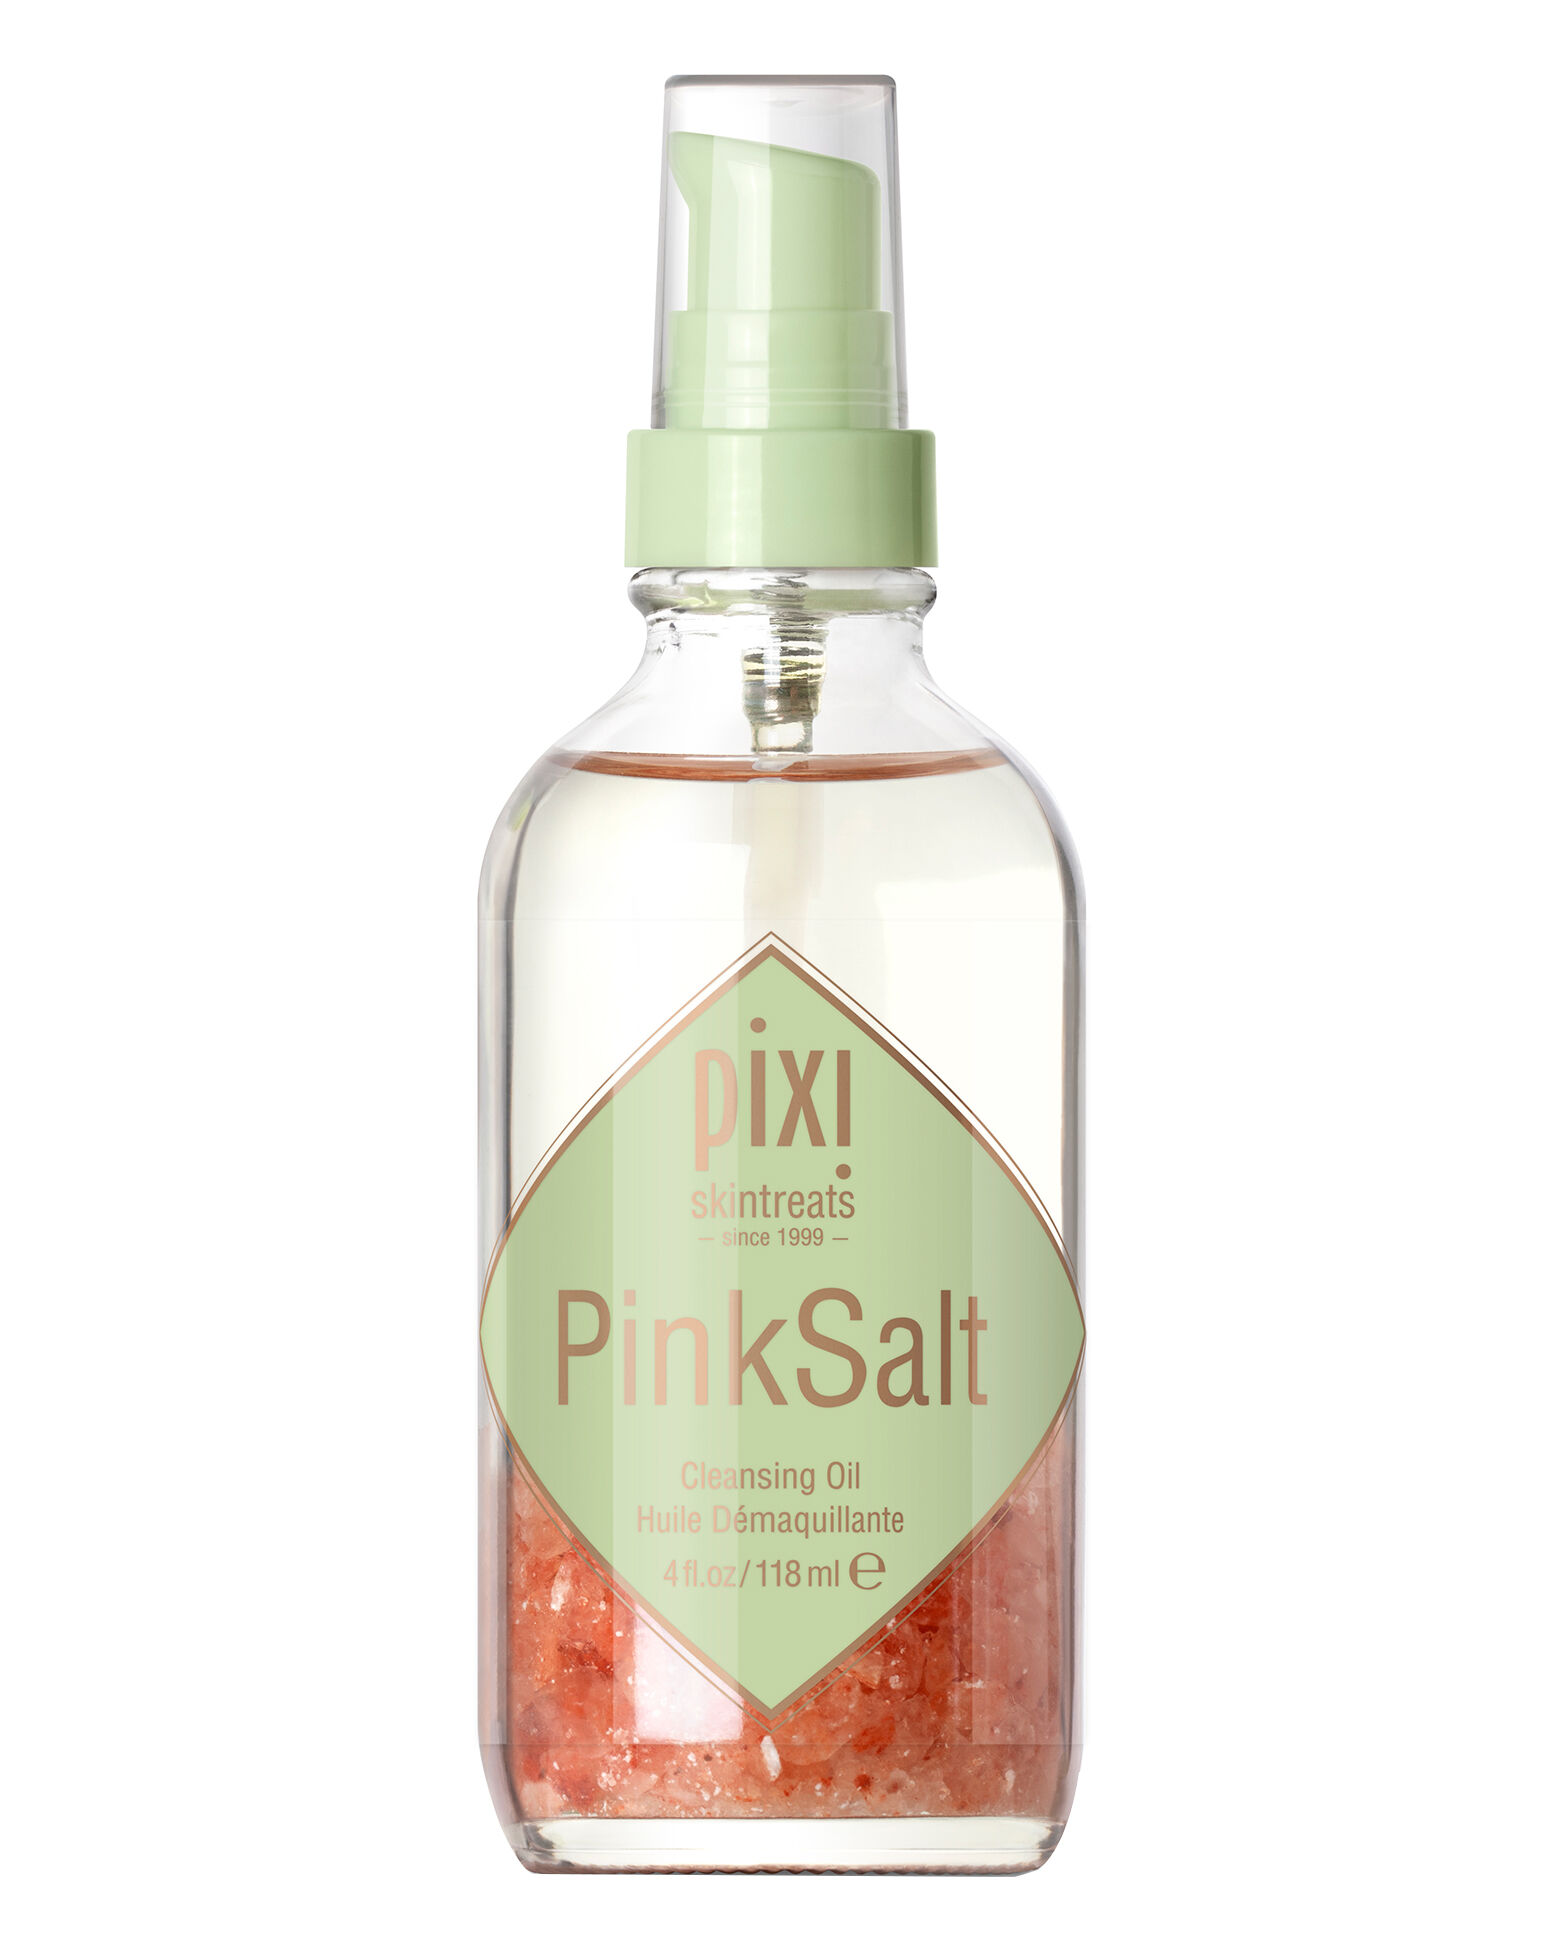 Pixi - PinkSalt Cleansing Oil